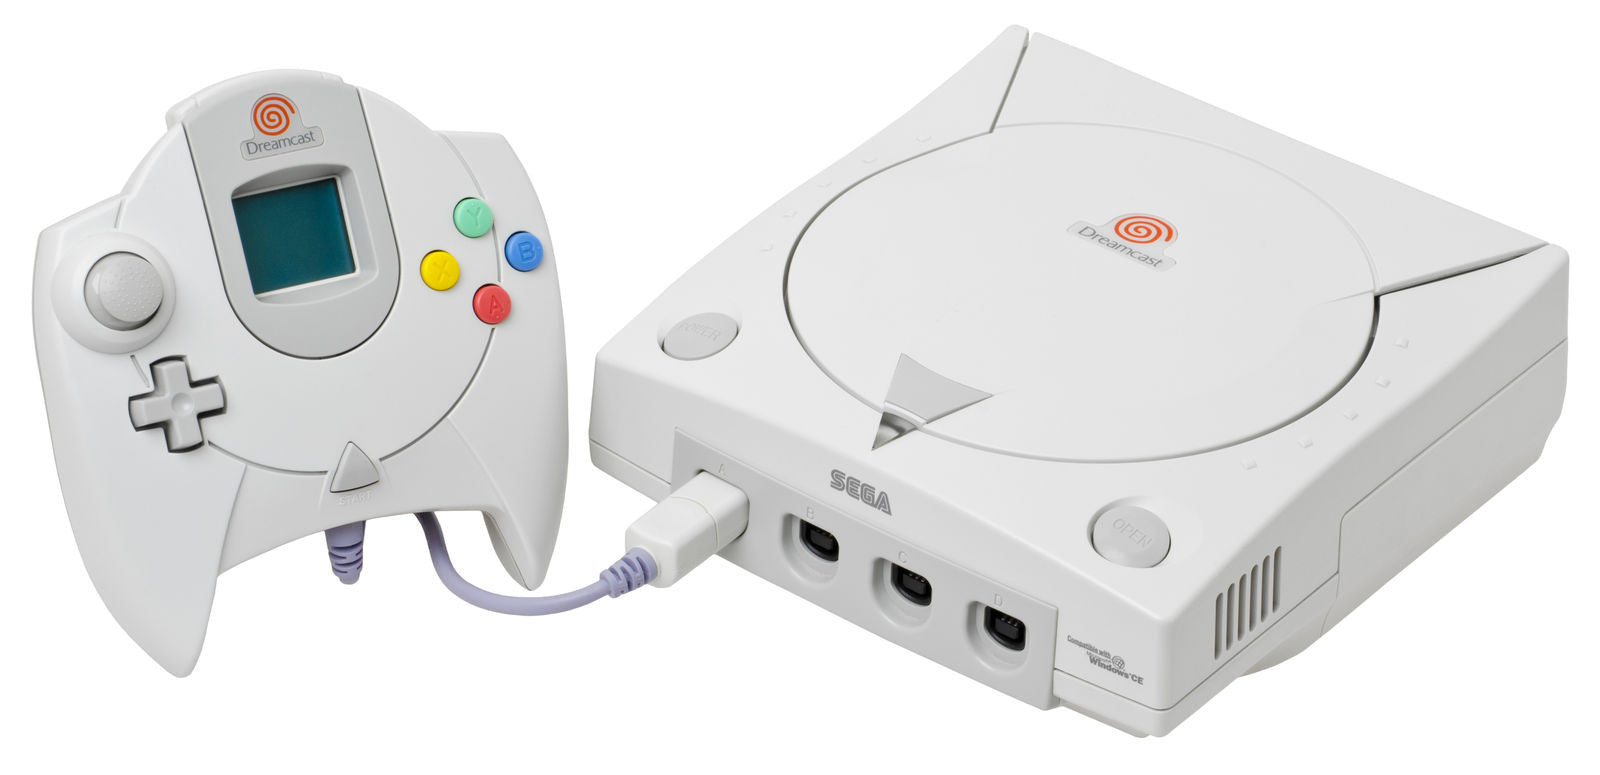 Sega Dreamcast (HKT 3000)